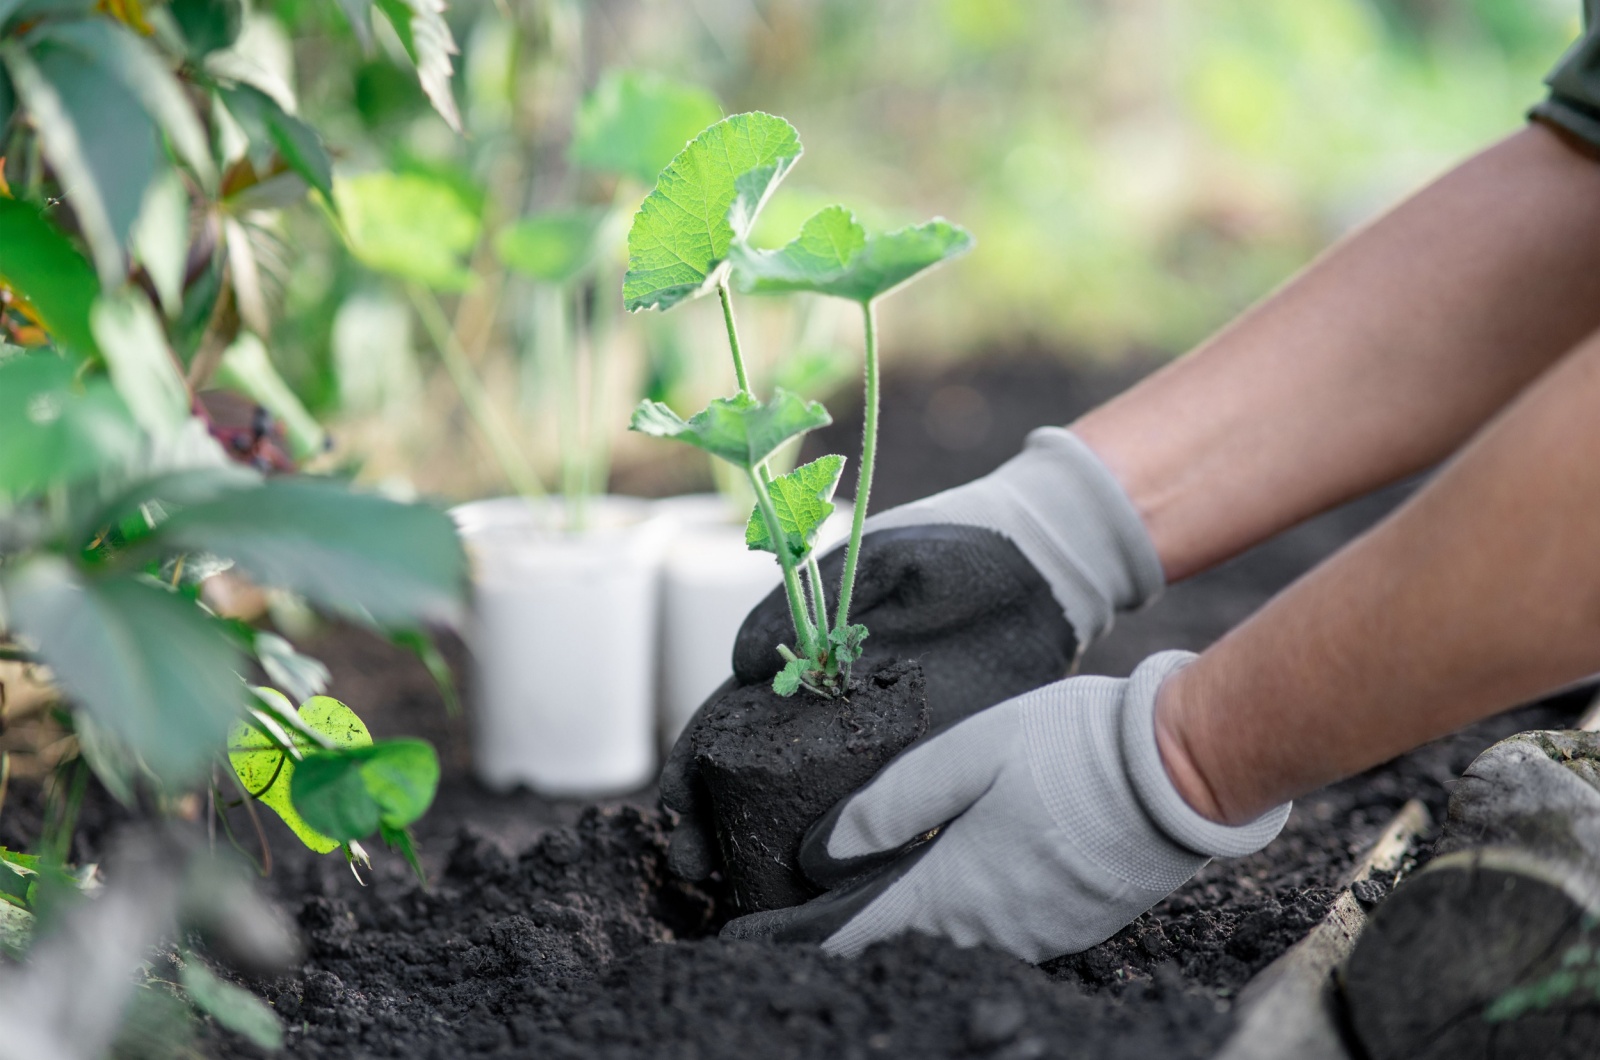 Hands in gardening gloves planting hollyhocks seedling